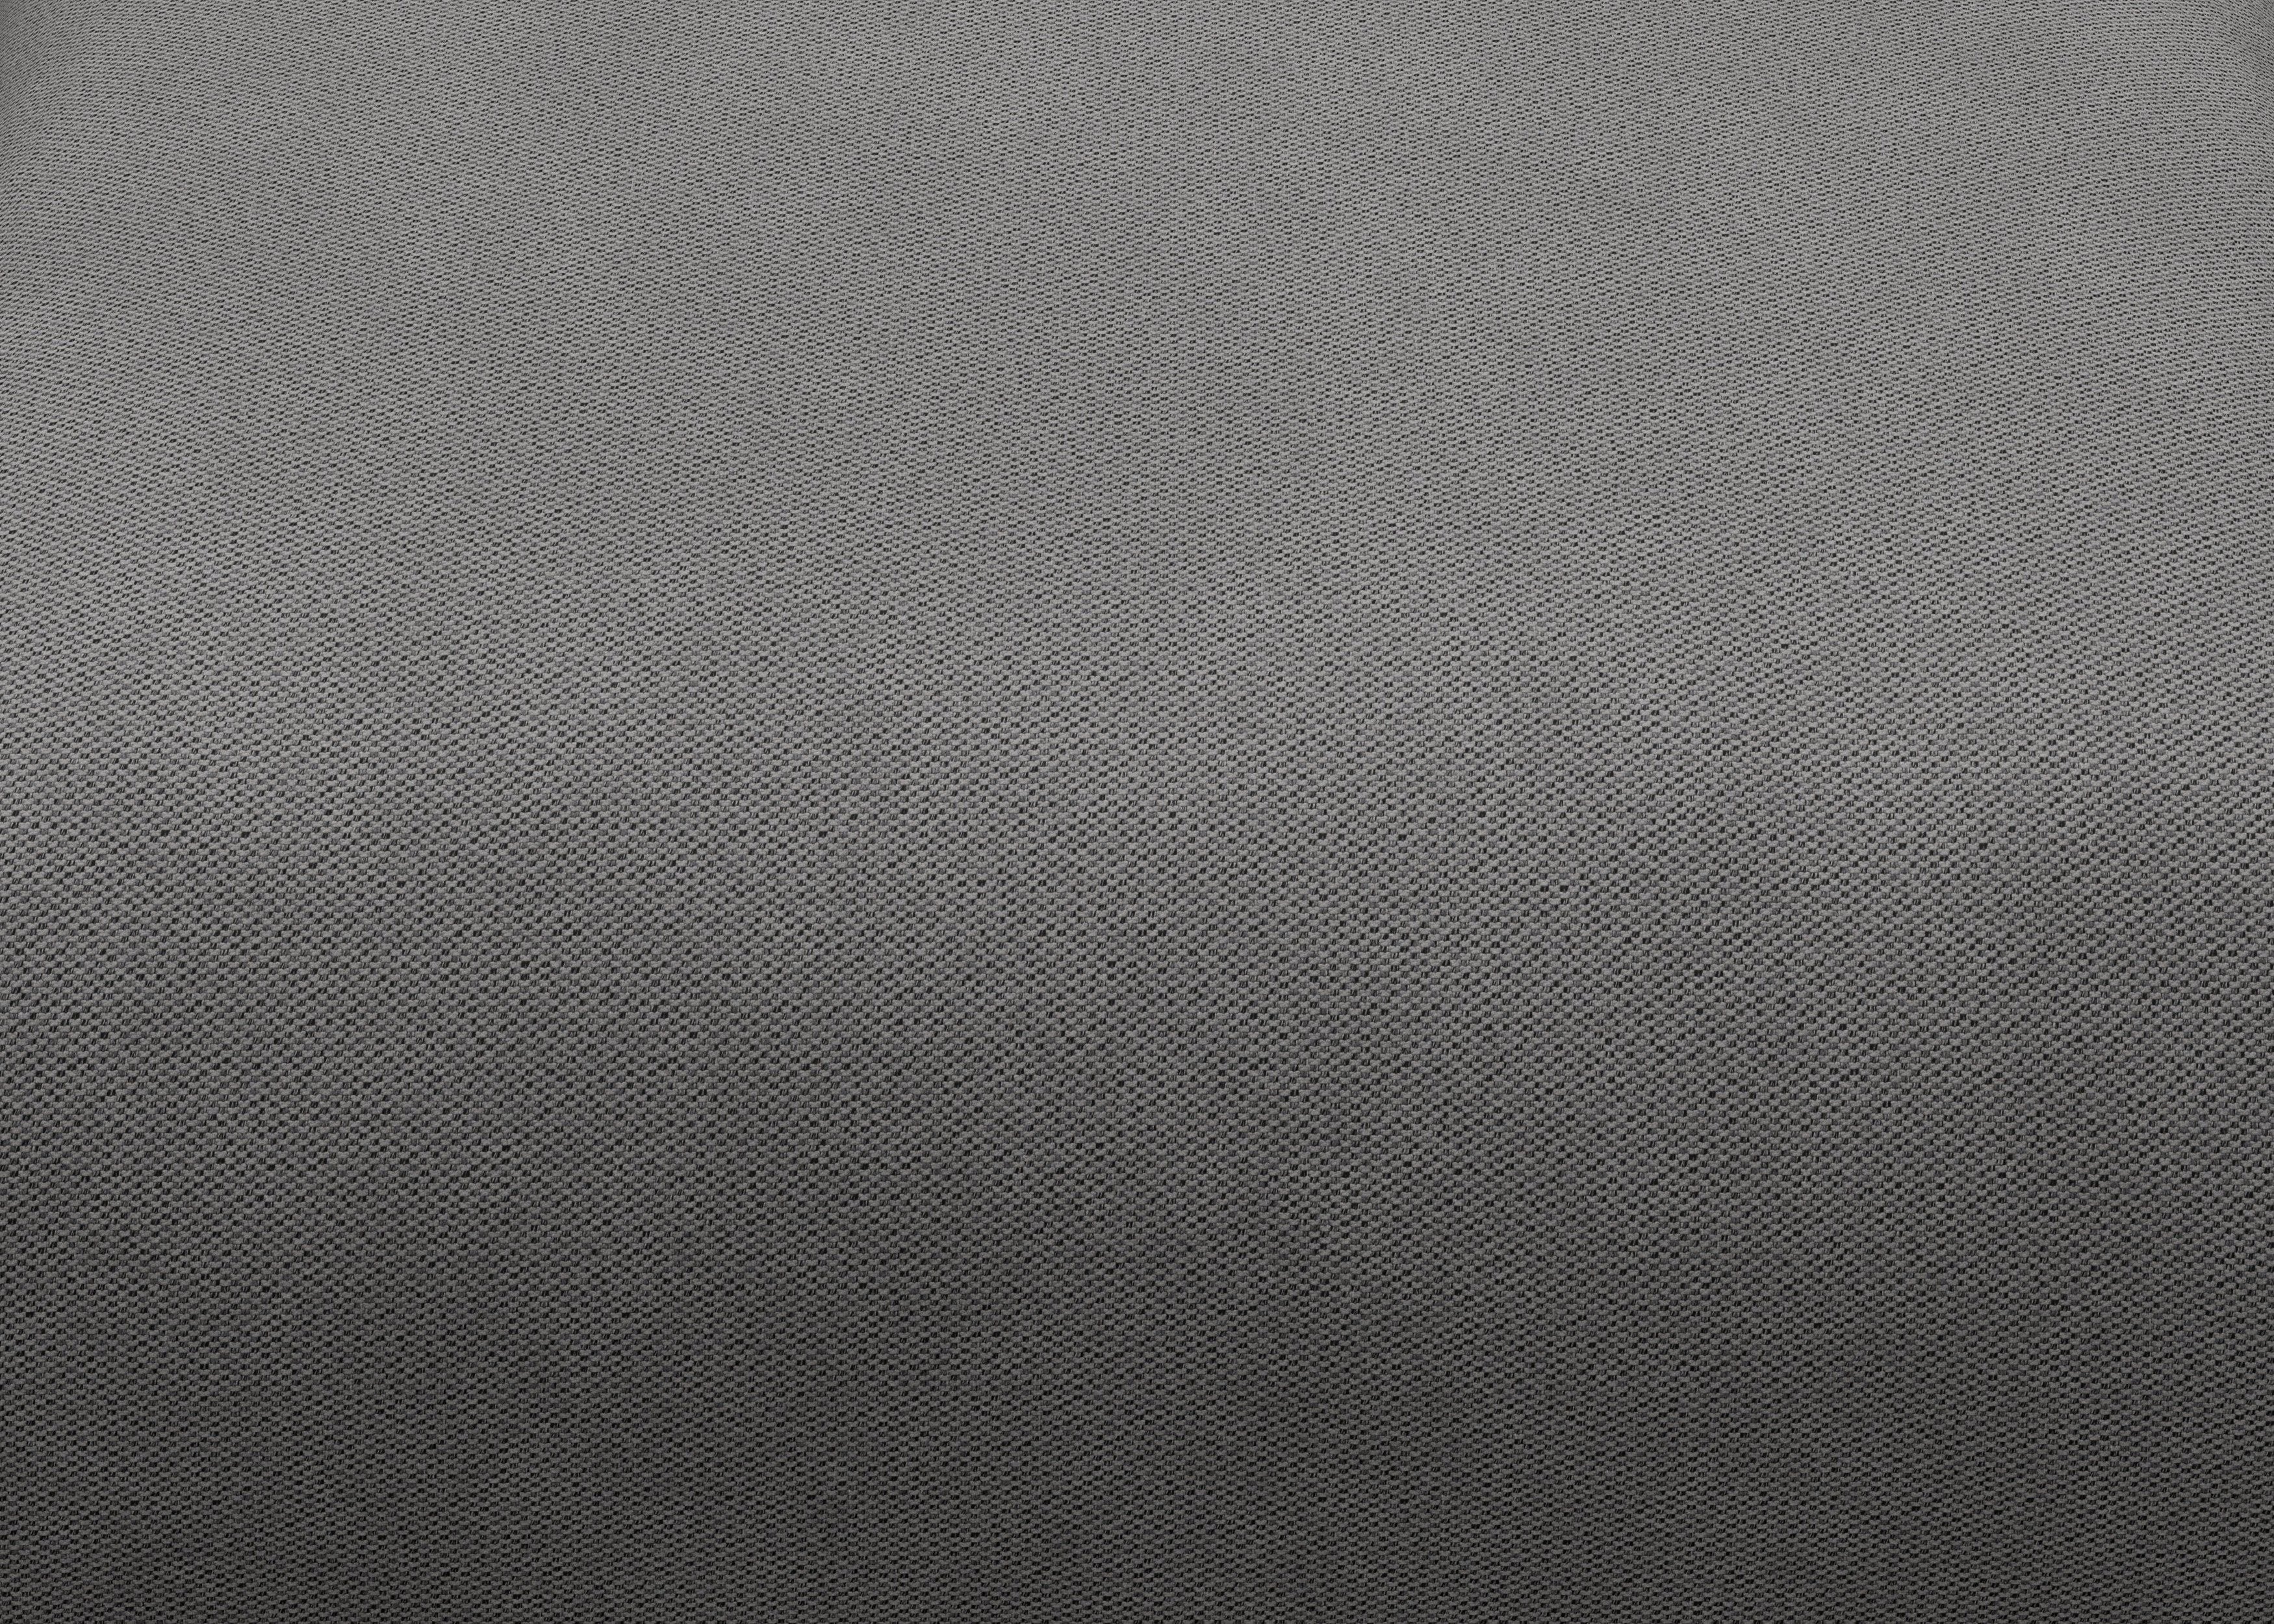 vetsak®-Two Seat Lounge Sofa L Knit dark grey